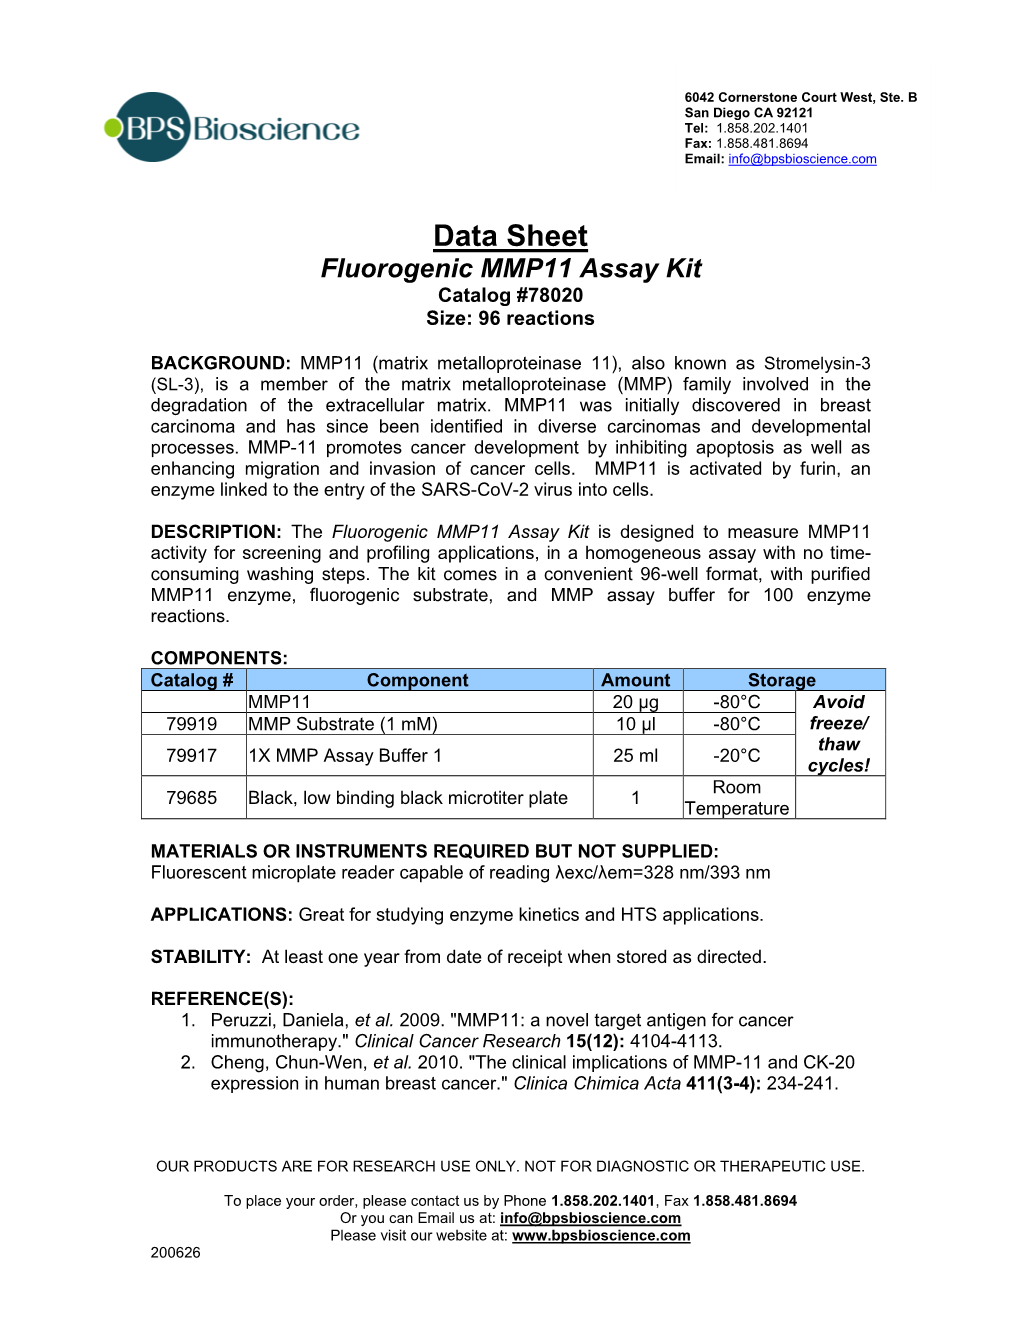 Data Sheet Fluorogenic MMP11 Assay Kit Catalog #78020 Size: 96 Reactions